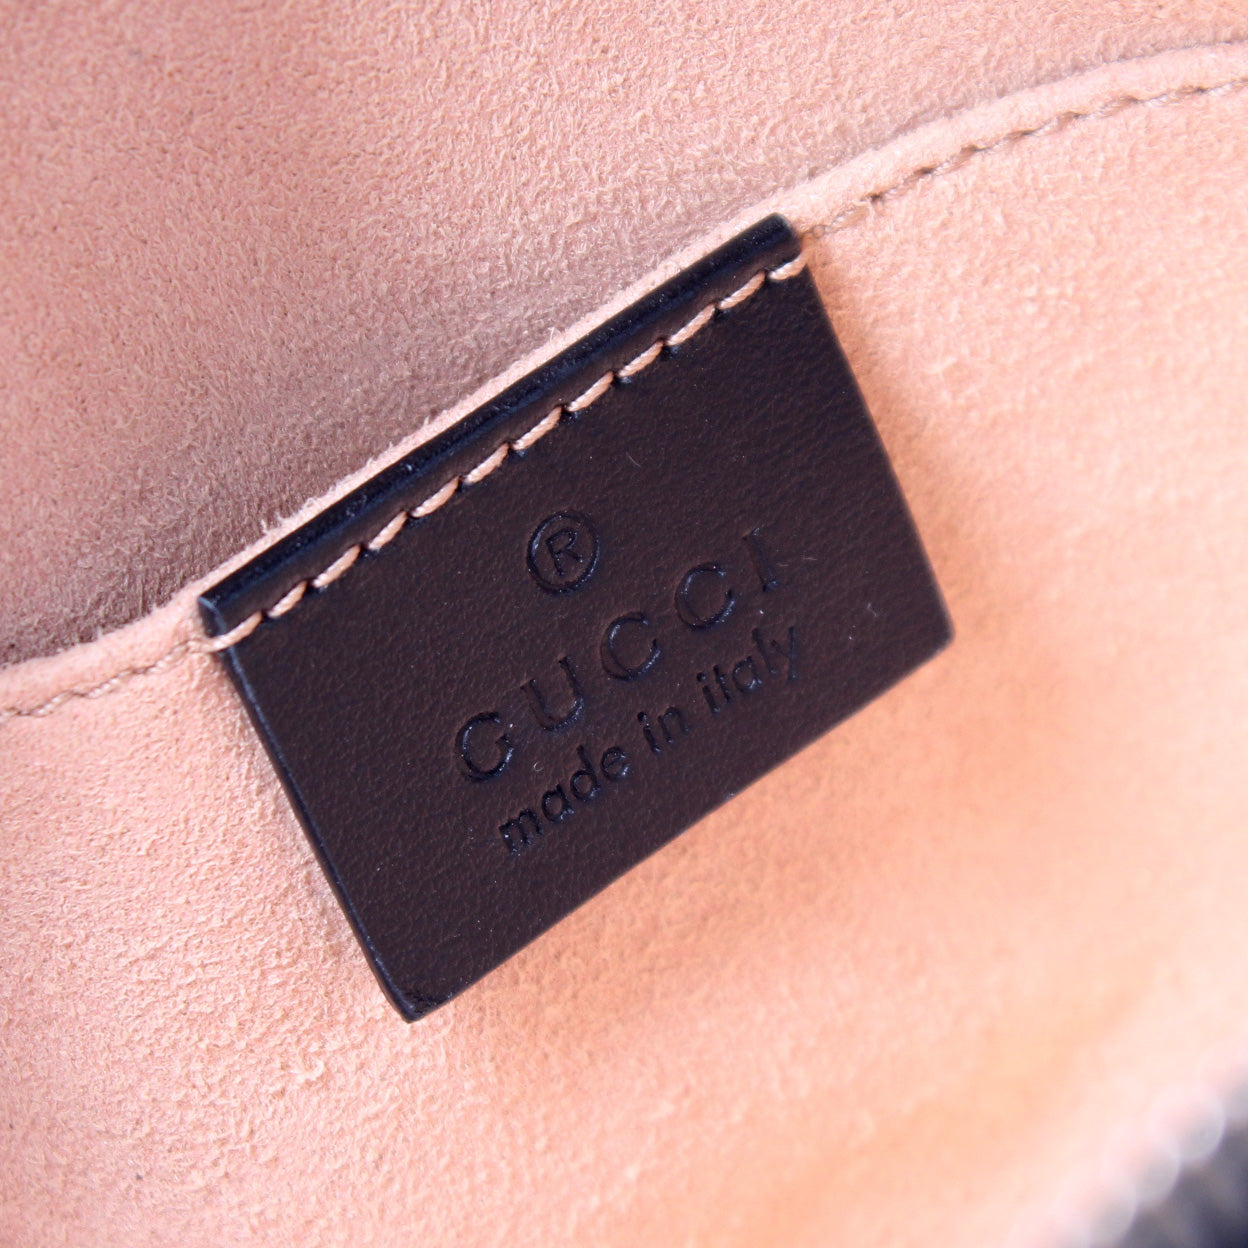 448065 Marmont Mini Camera Bag – Keeks Designer Handbags